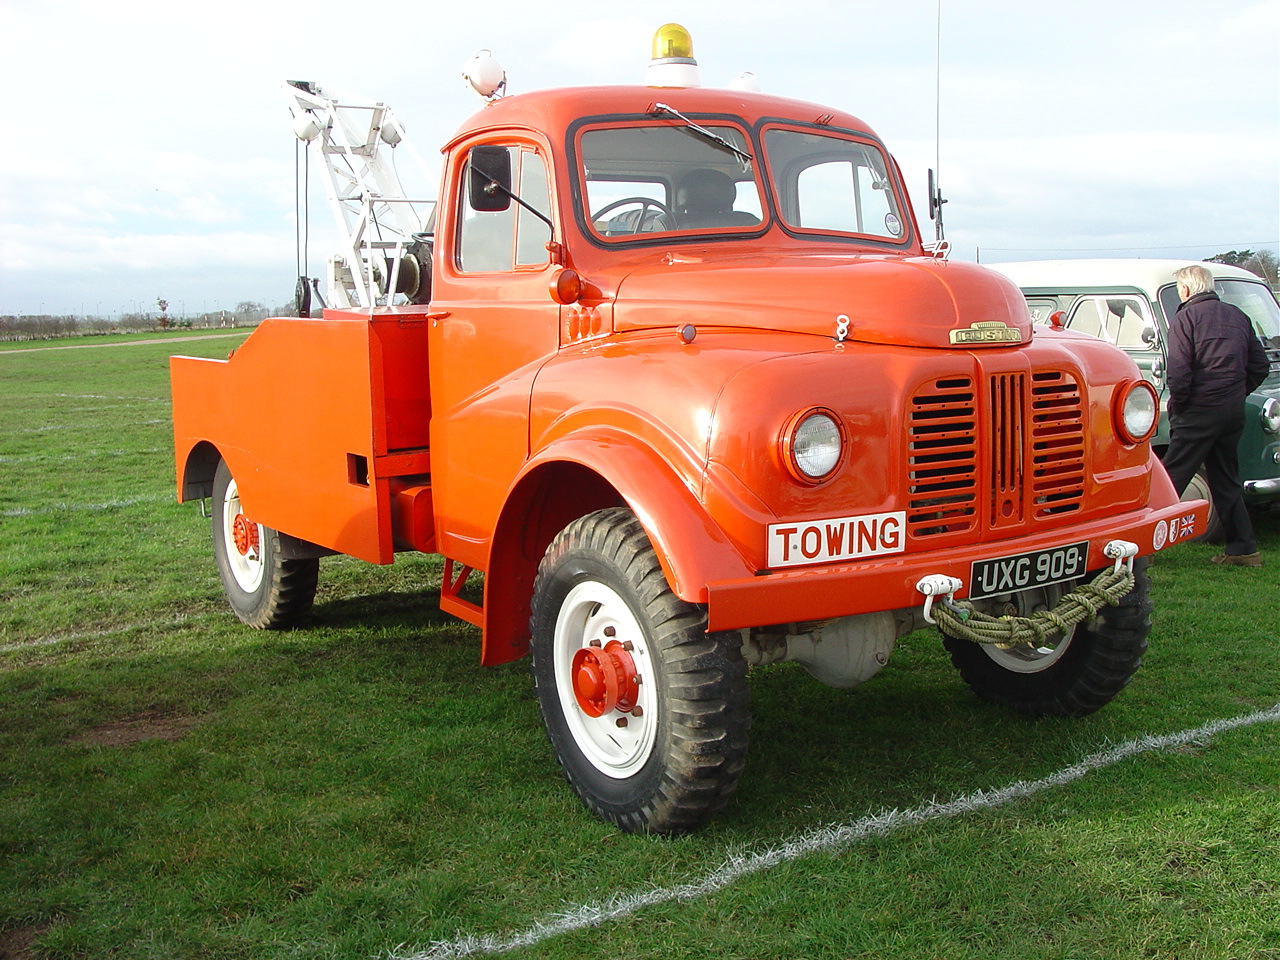 UXG 909 - 1952 Austin K9 recovery truck | Flickr - Photo Sharing!